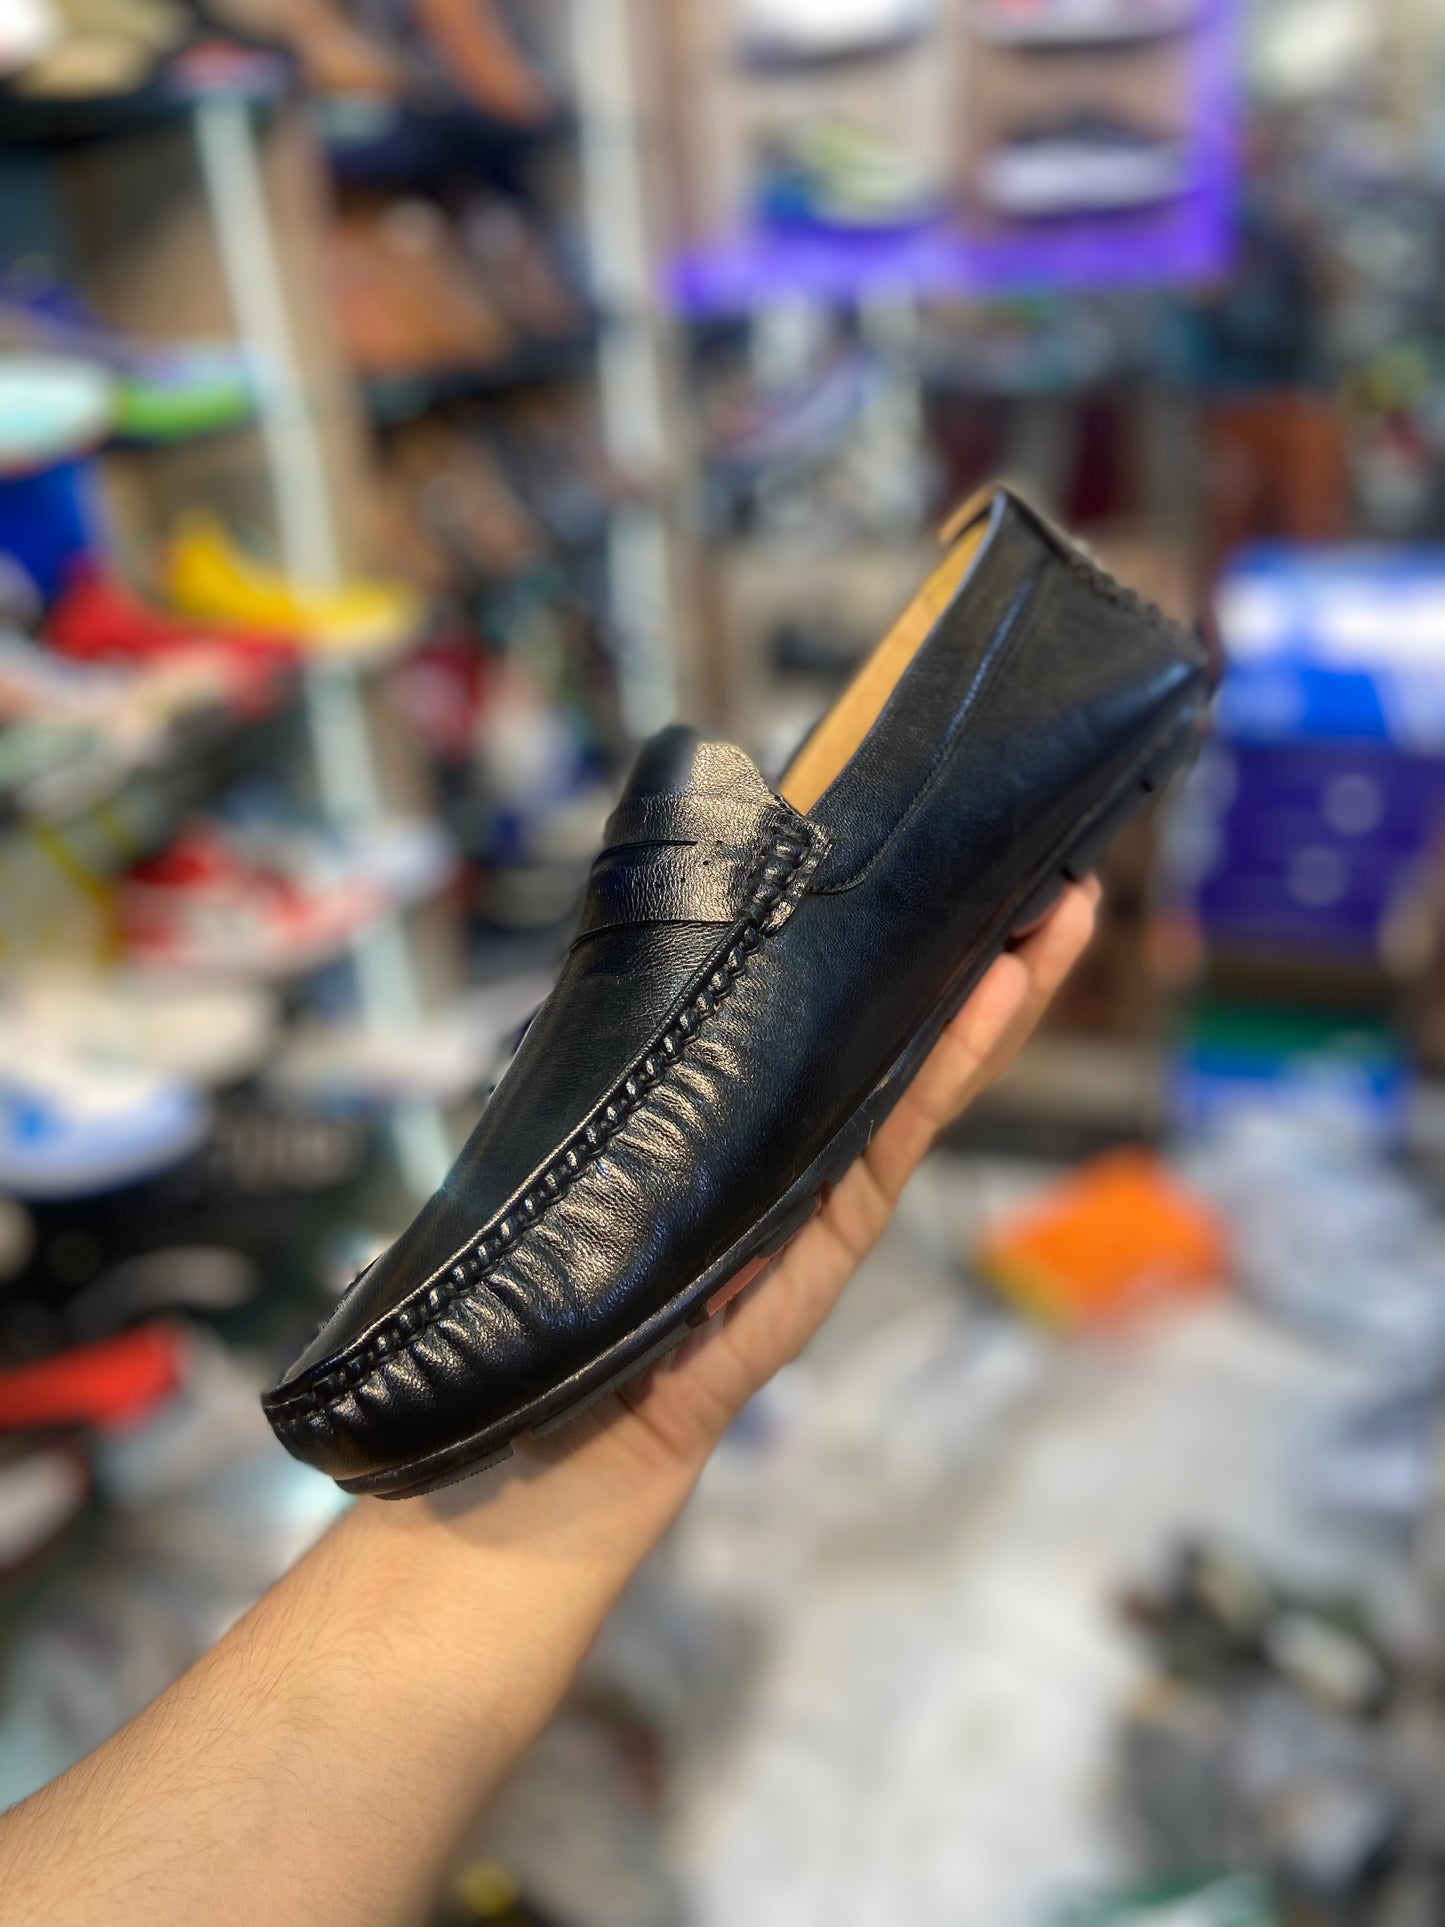 Black Look Style Buckle Loafers Formal Shoes For Men Model Number 6236 (Black)